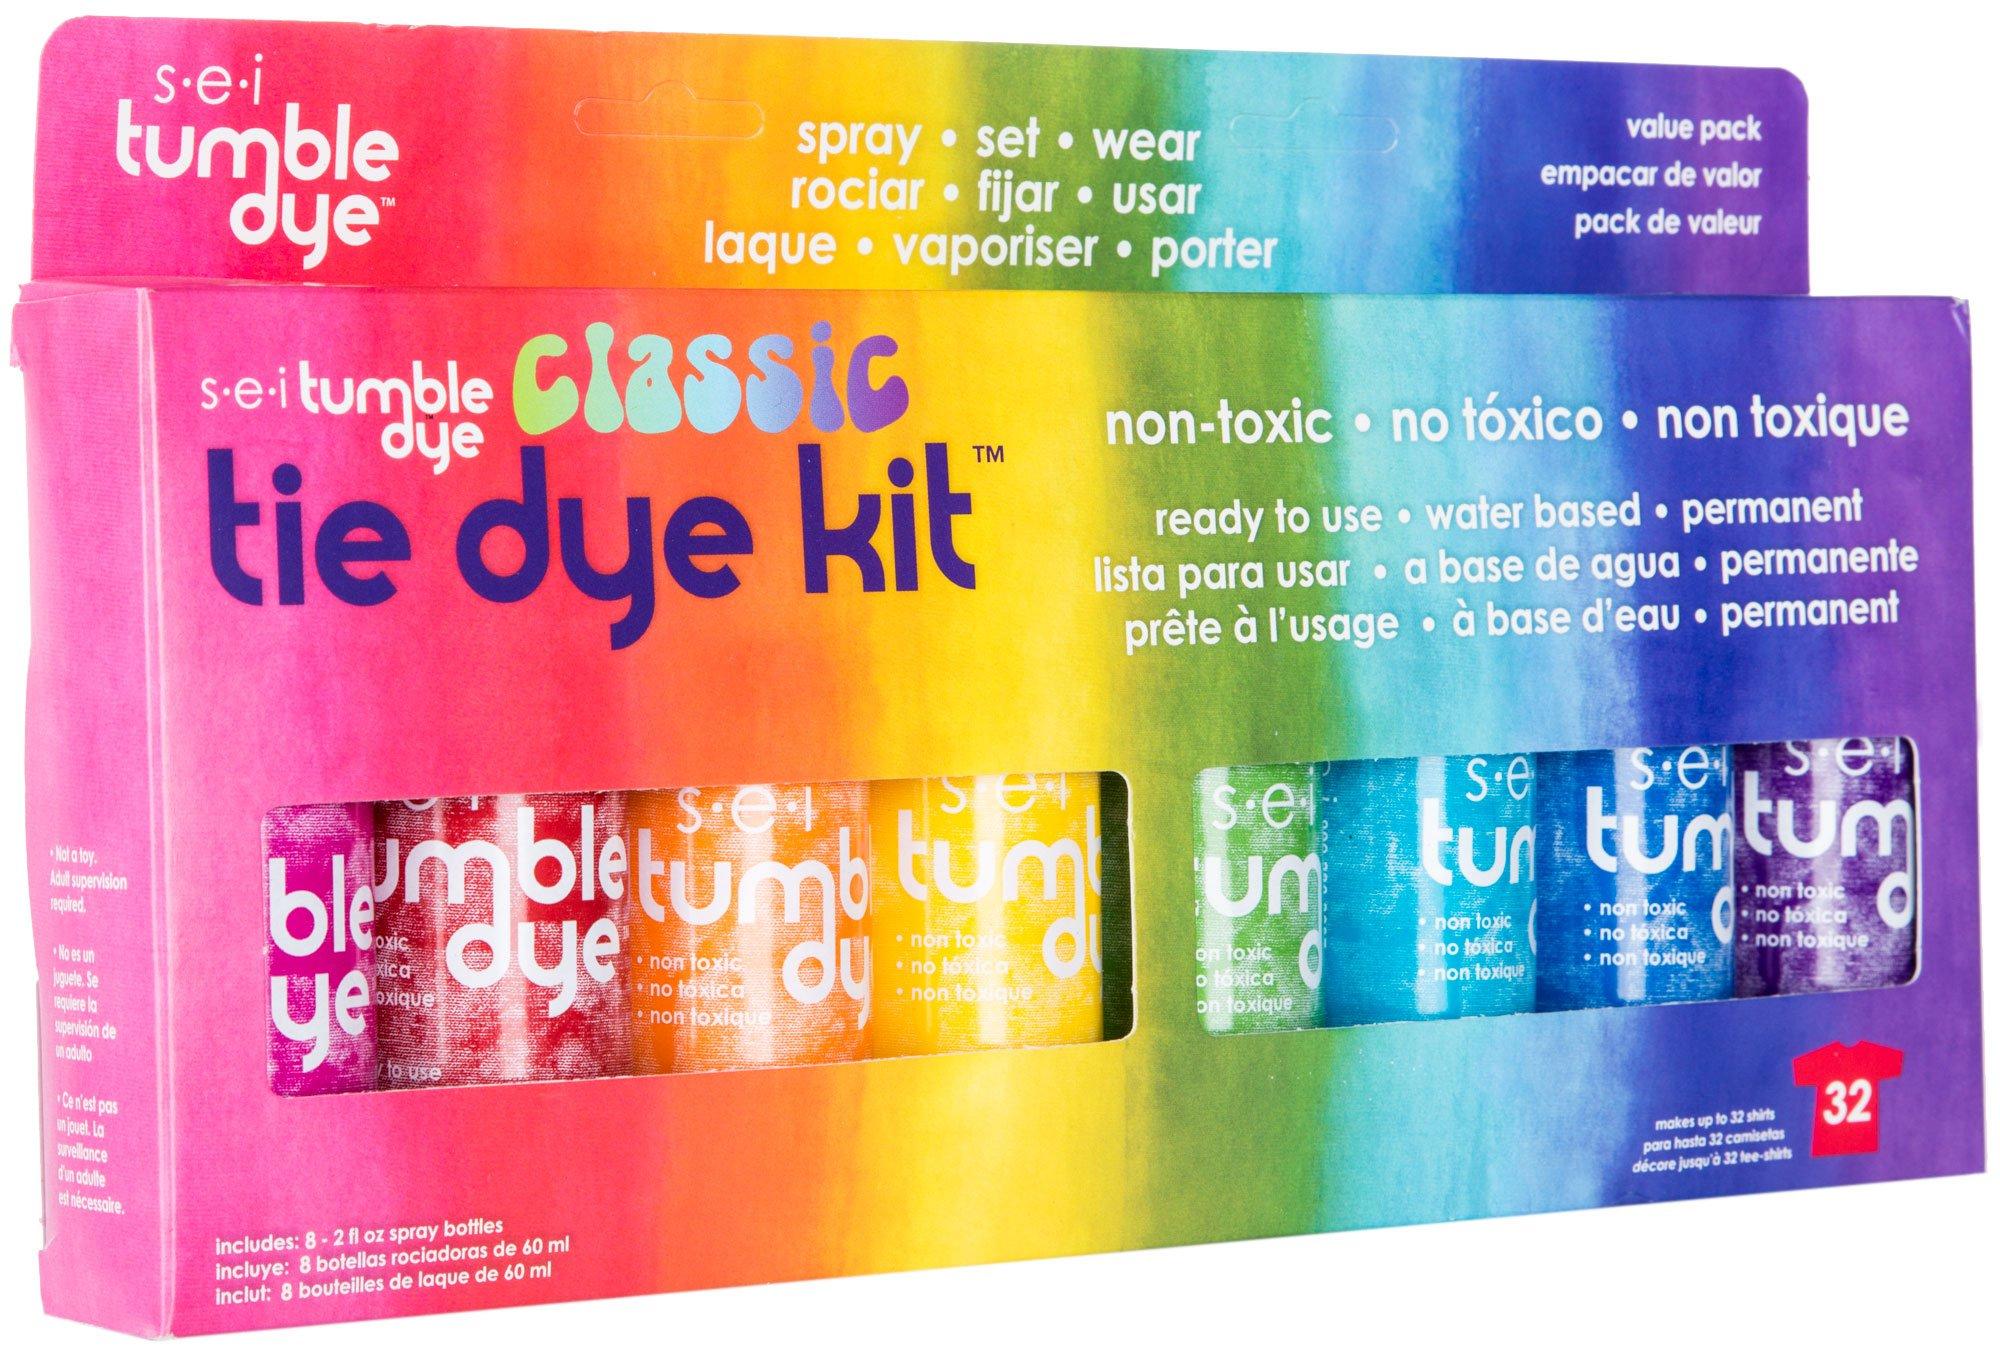 One-Step Tie-Dye Kit, Hobby Lobby, 840322